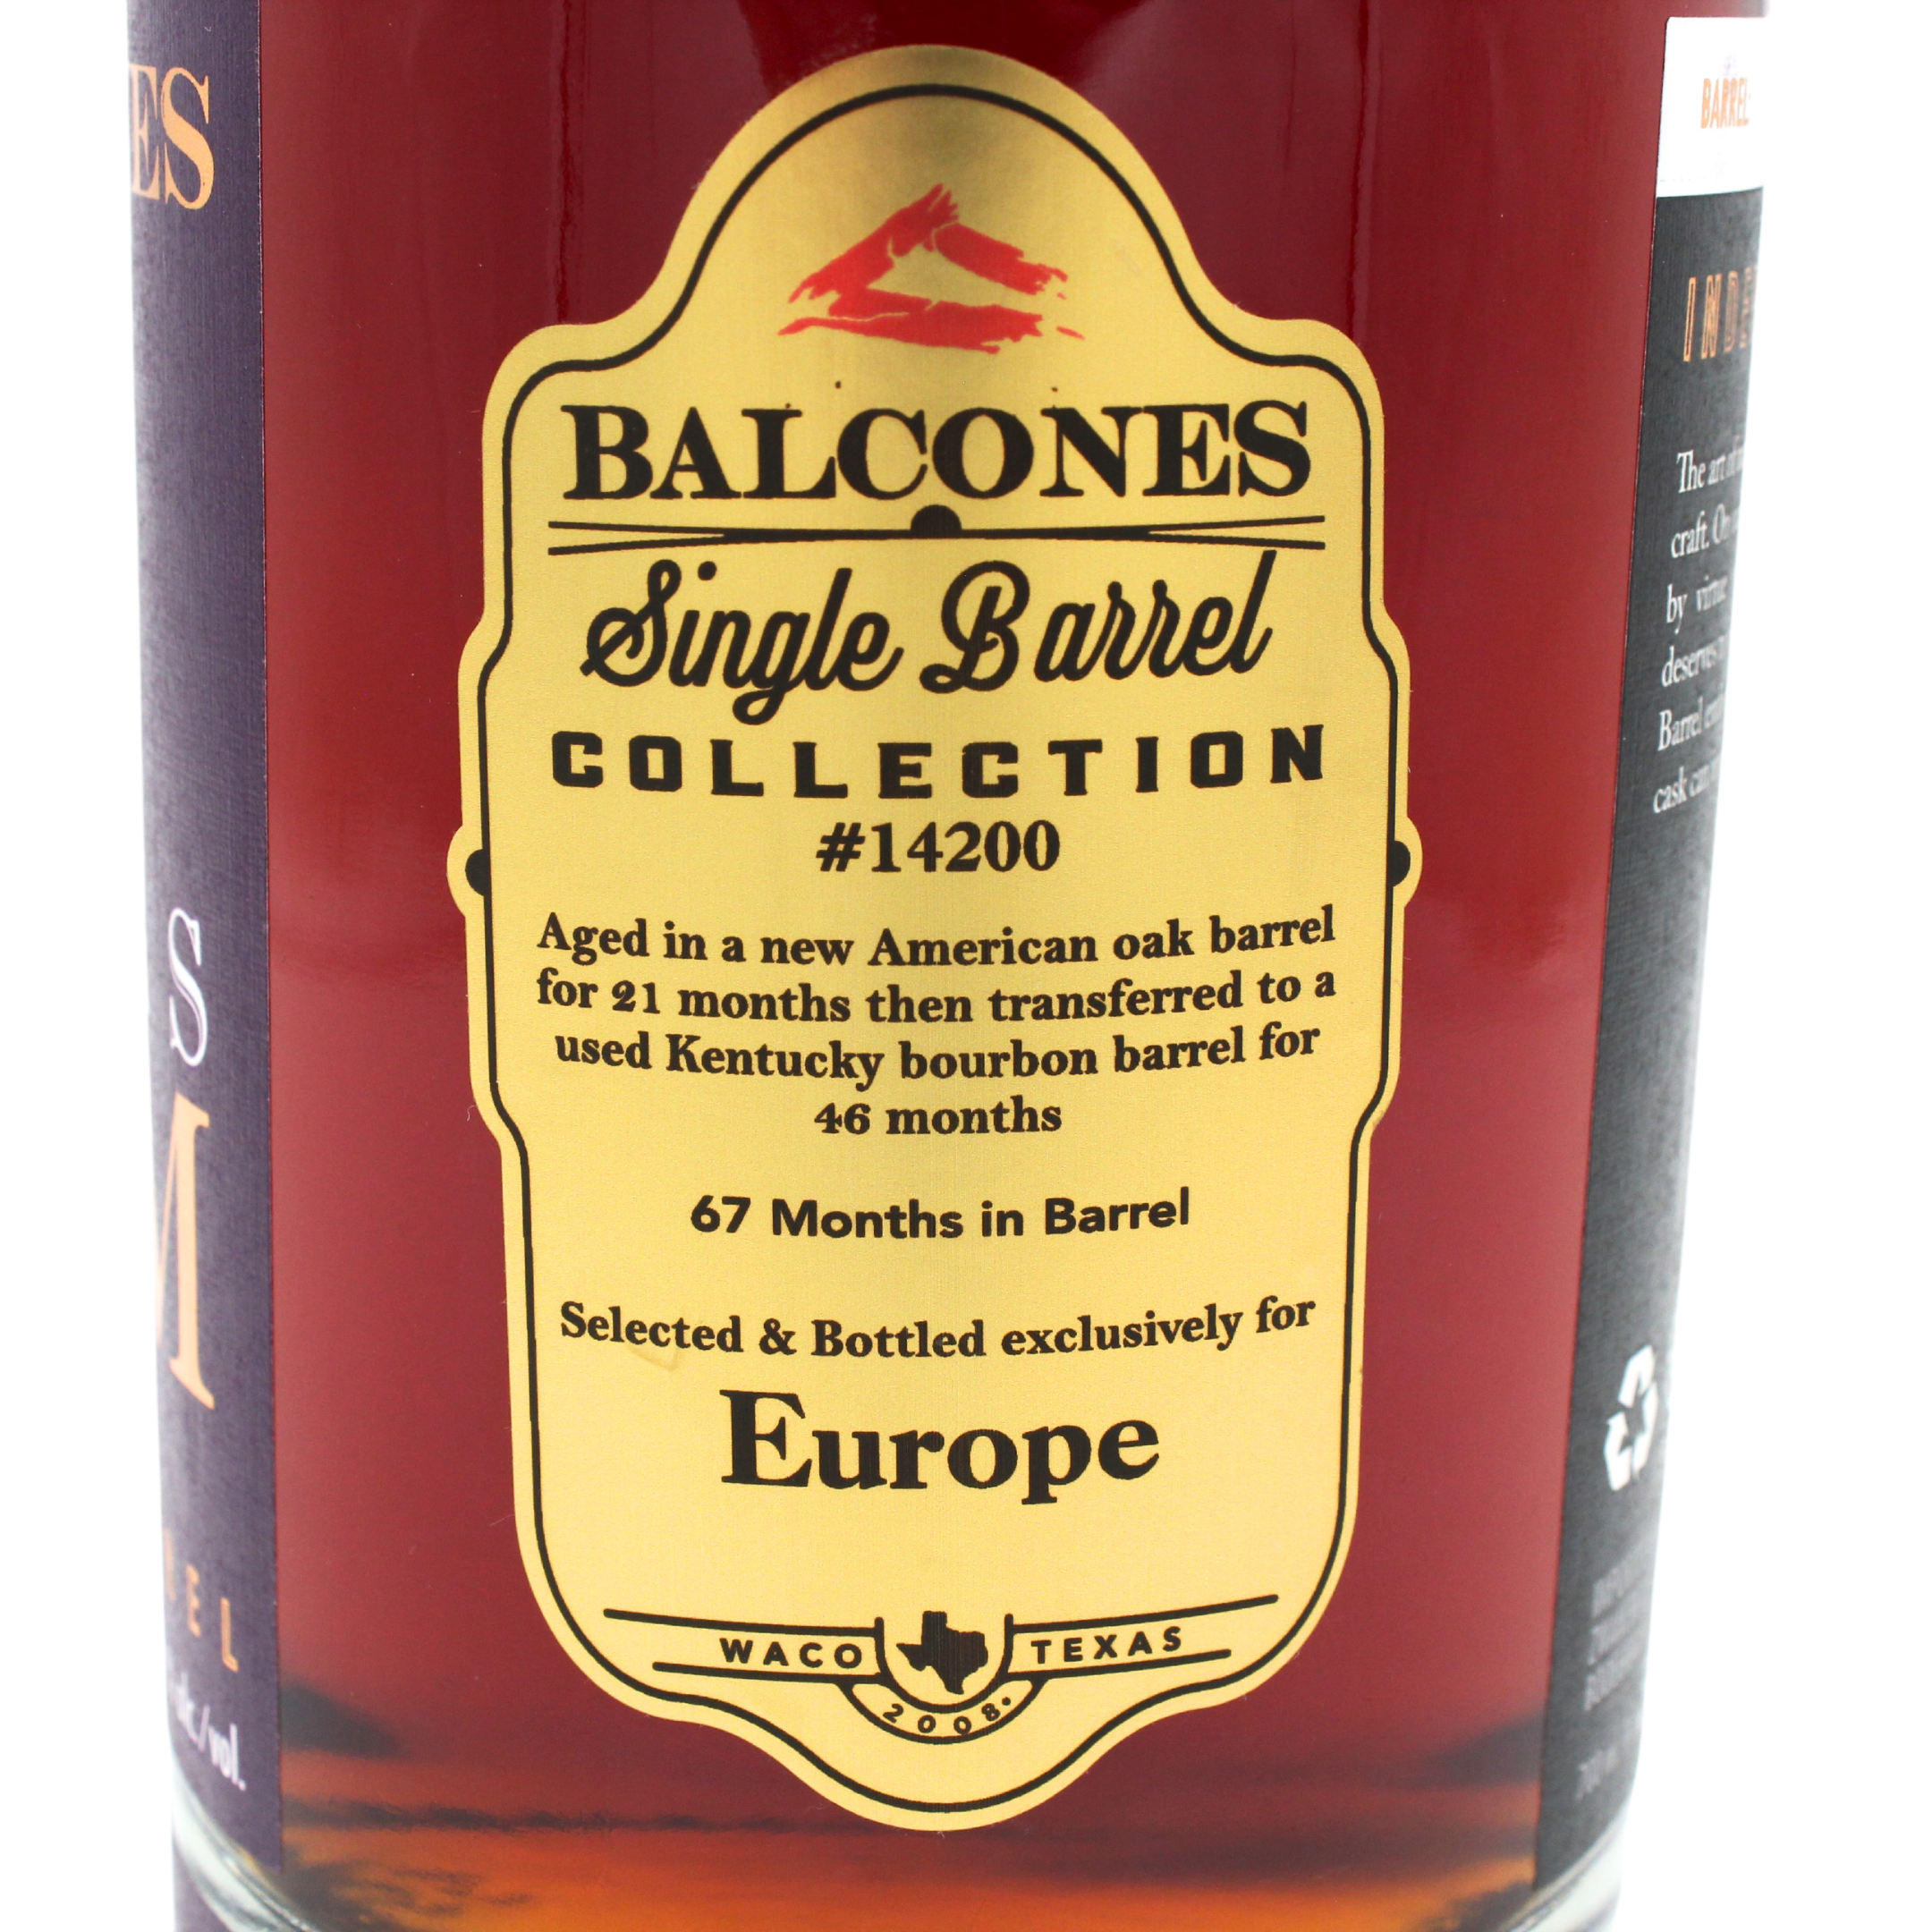 BALCONES - Texas Rum